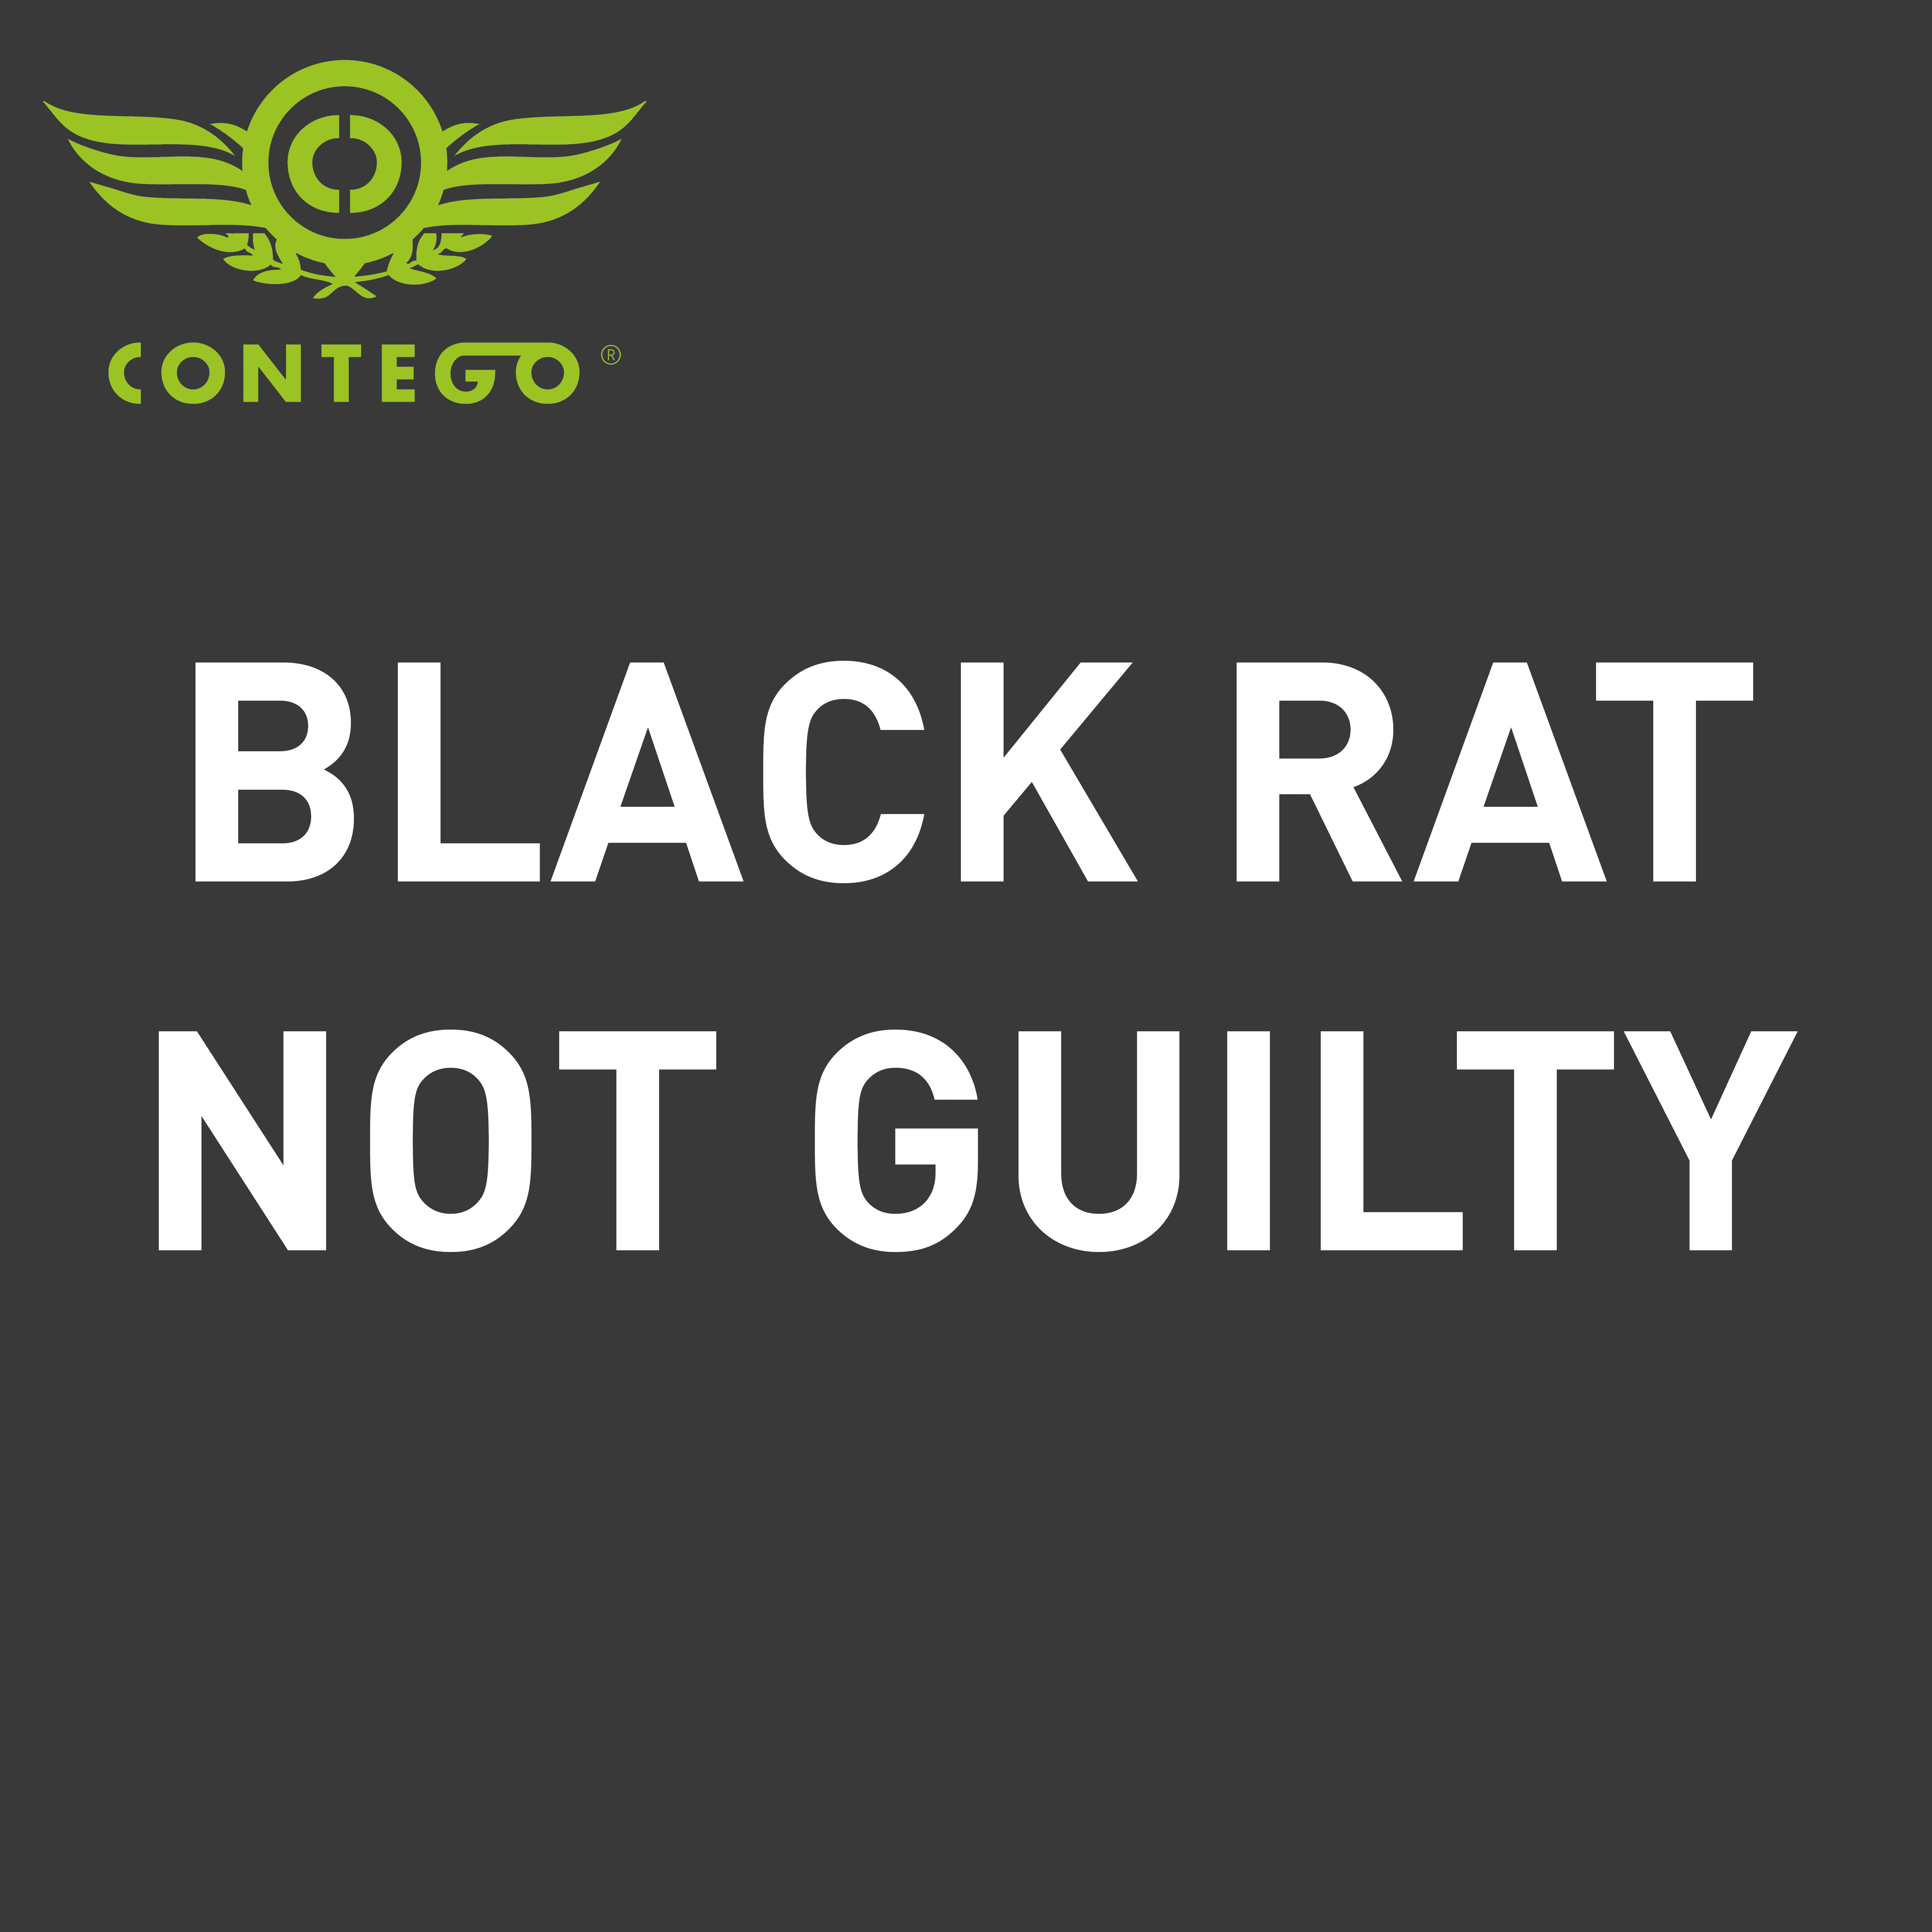 Black rat not guilty